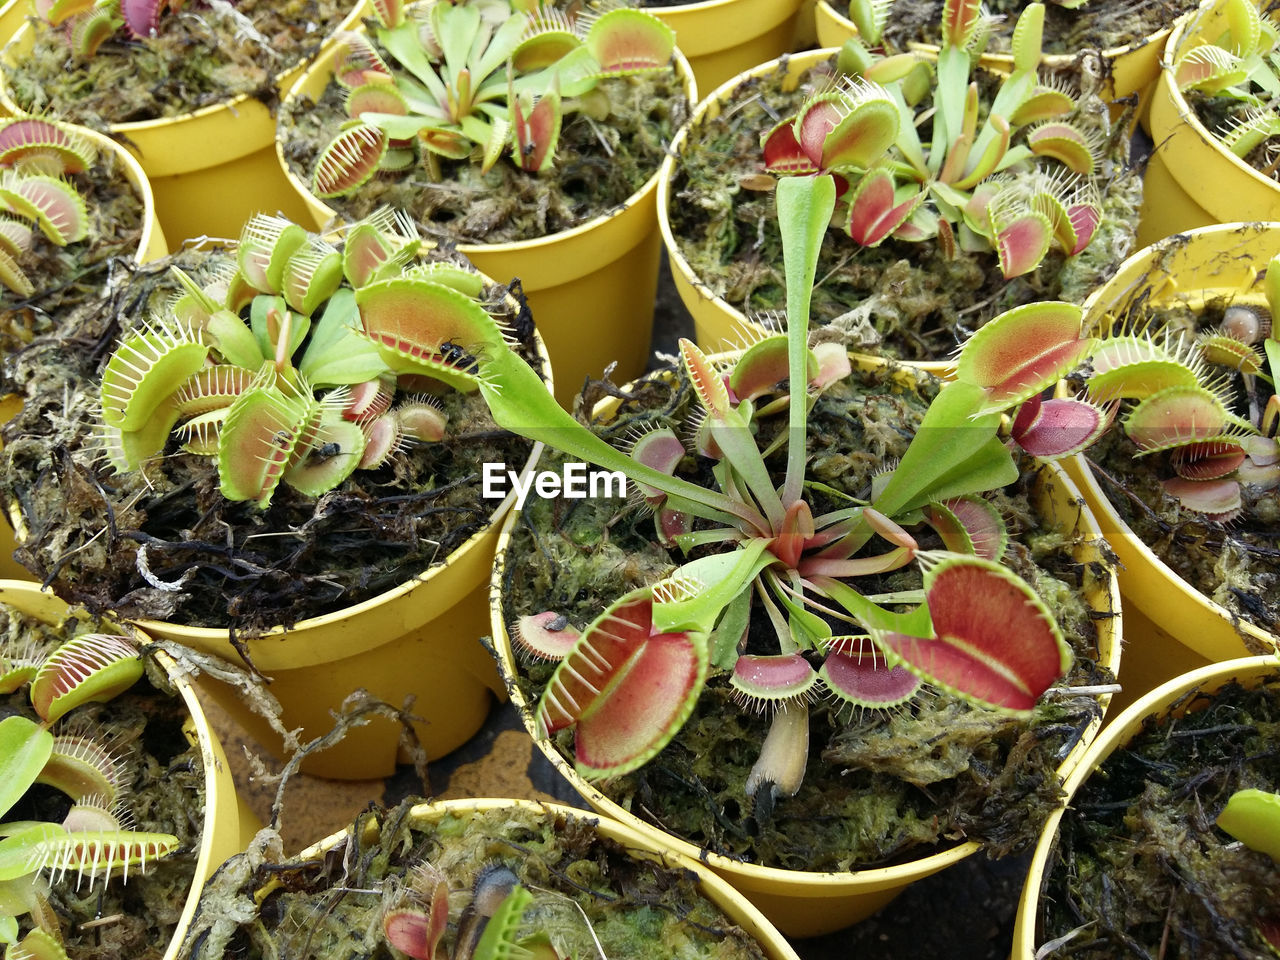 Carnivorous tropical flytrap pitcher plant,nepenthes species